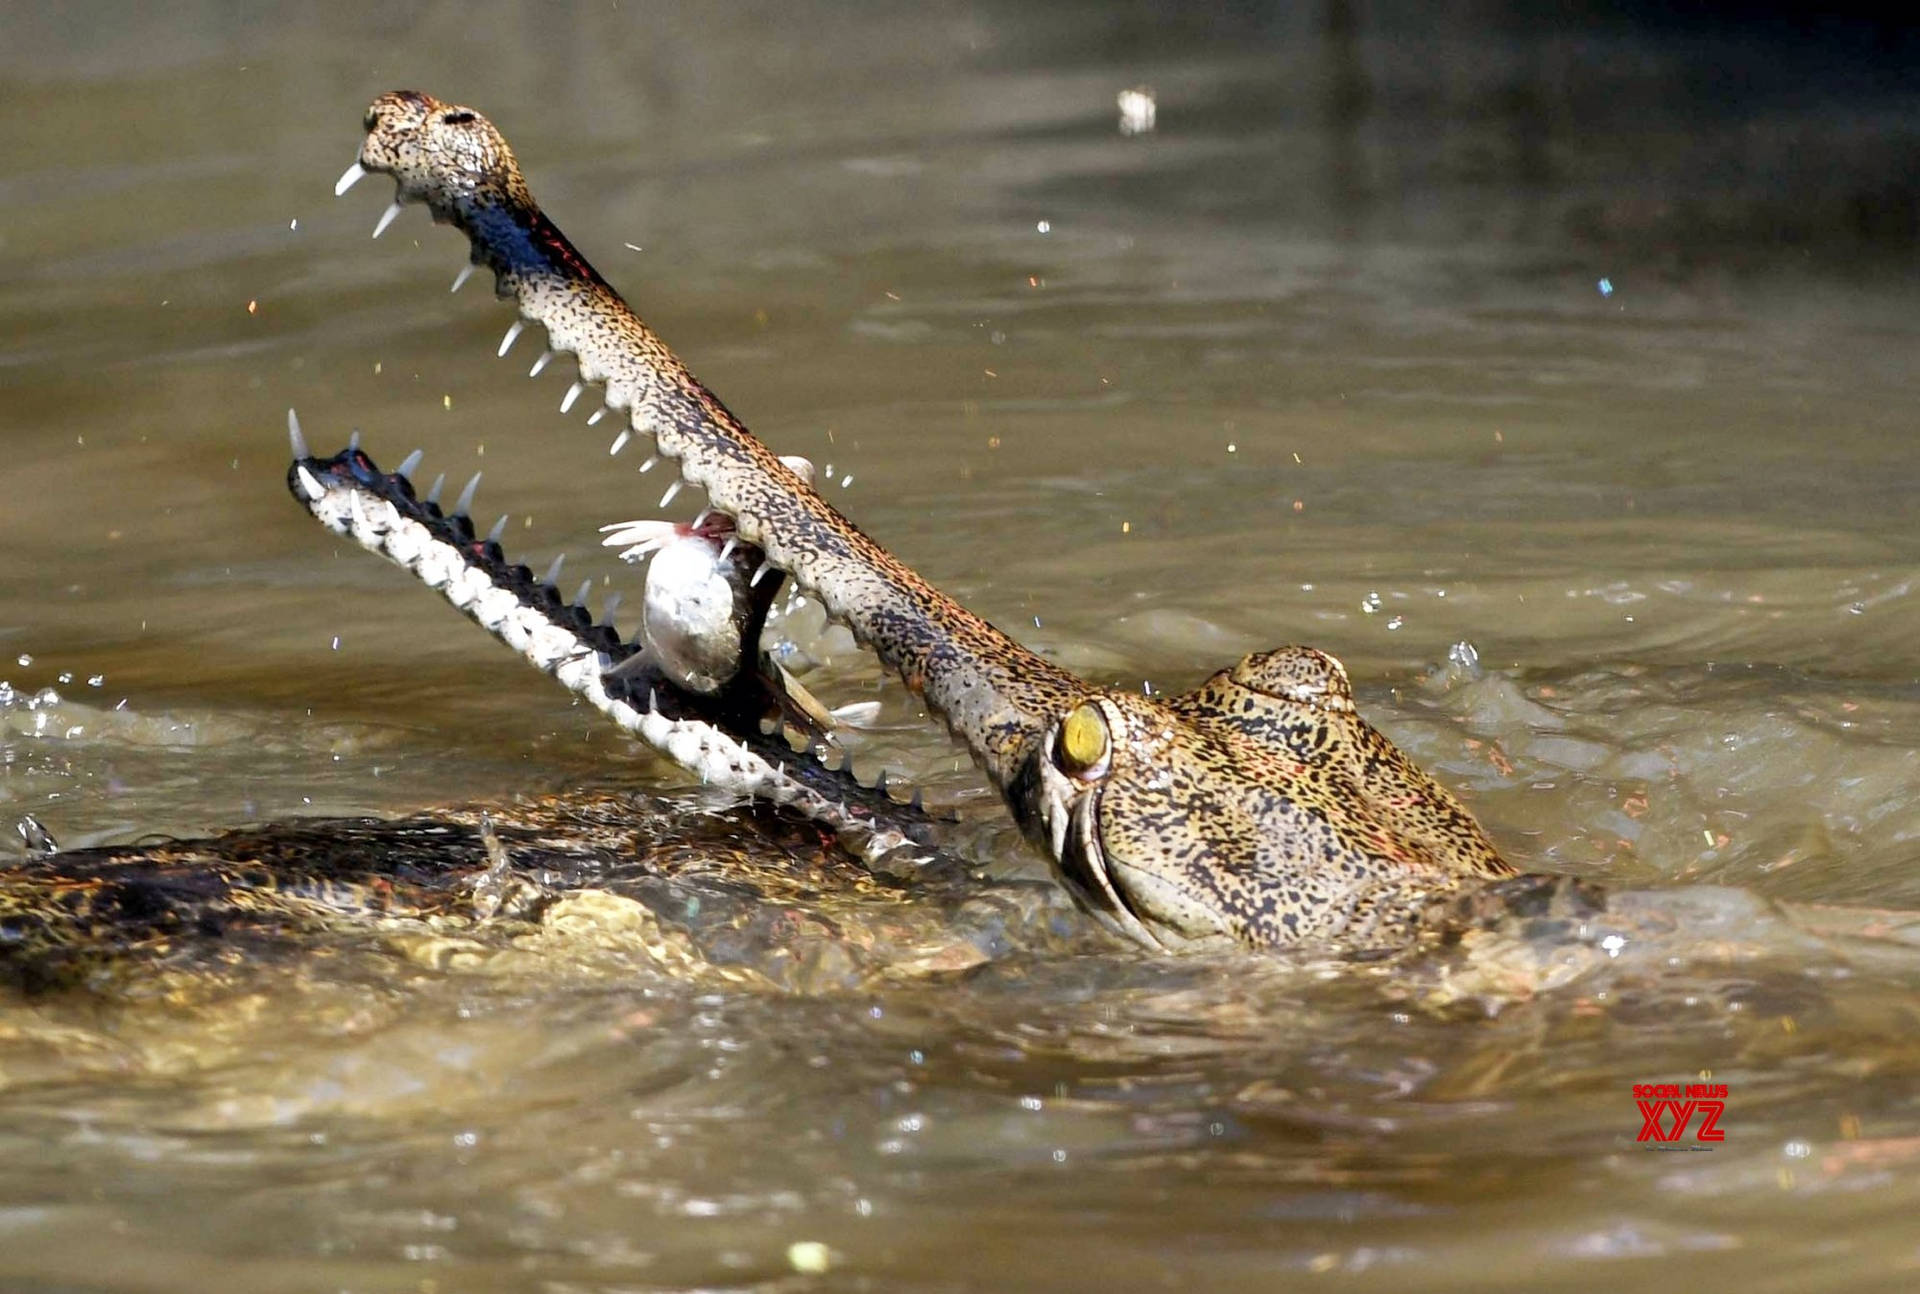 Gavial Crocodile Attack Nature Photography Wallpaper